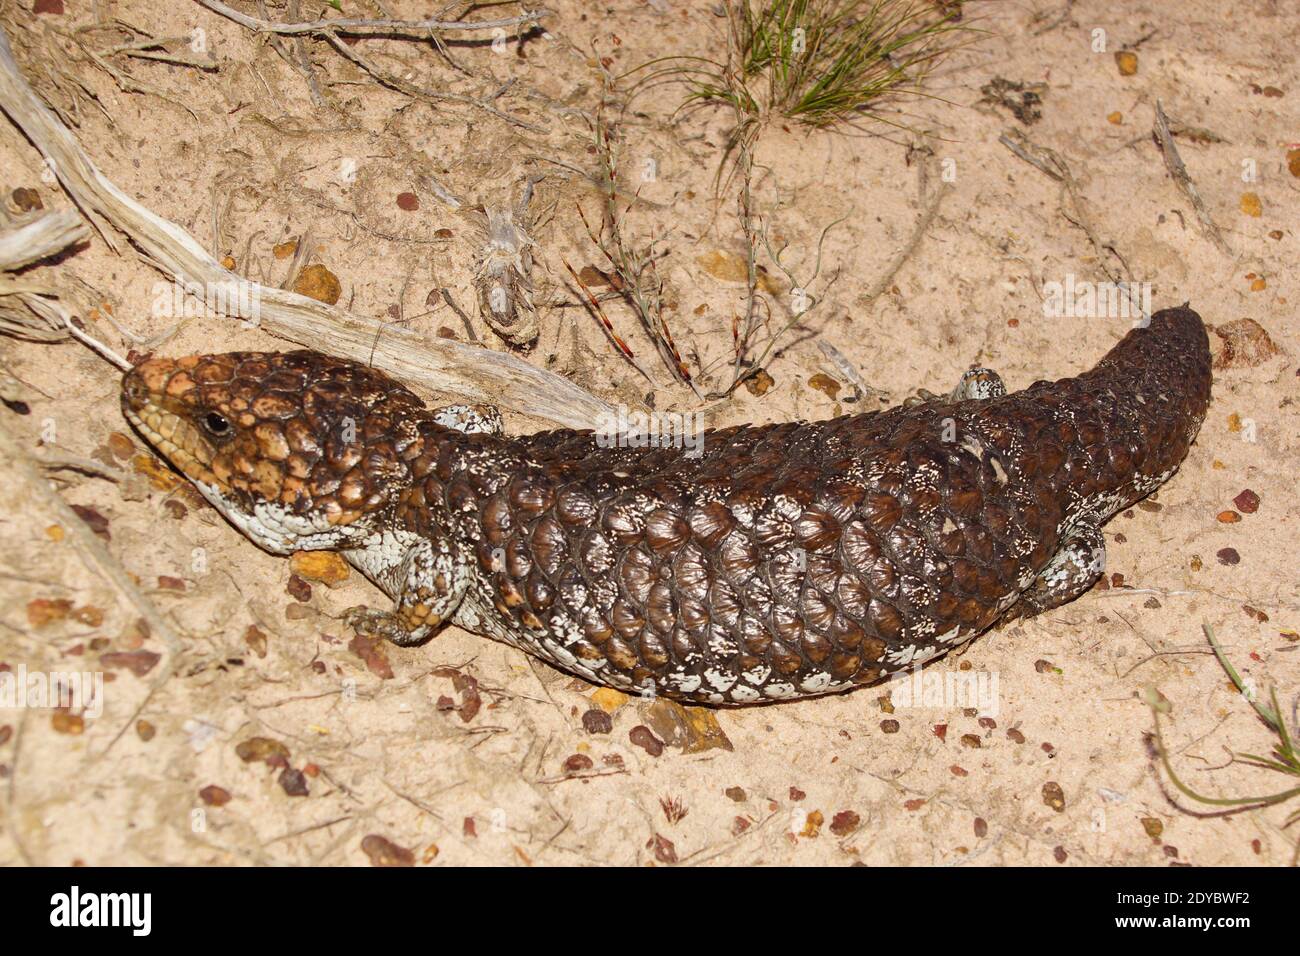 Tiliqua rugosa, the western shingleback or bobtail lizard, near Cranbrook in Western Australia Stock Photo